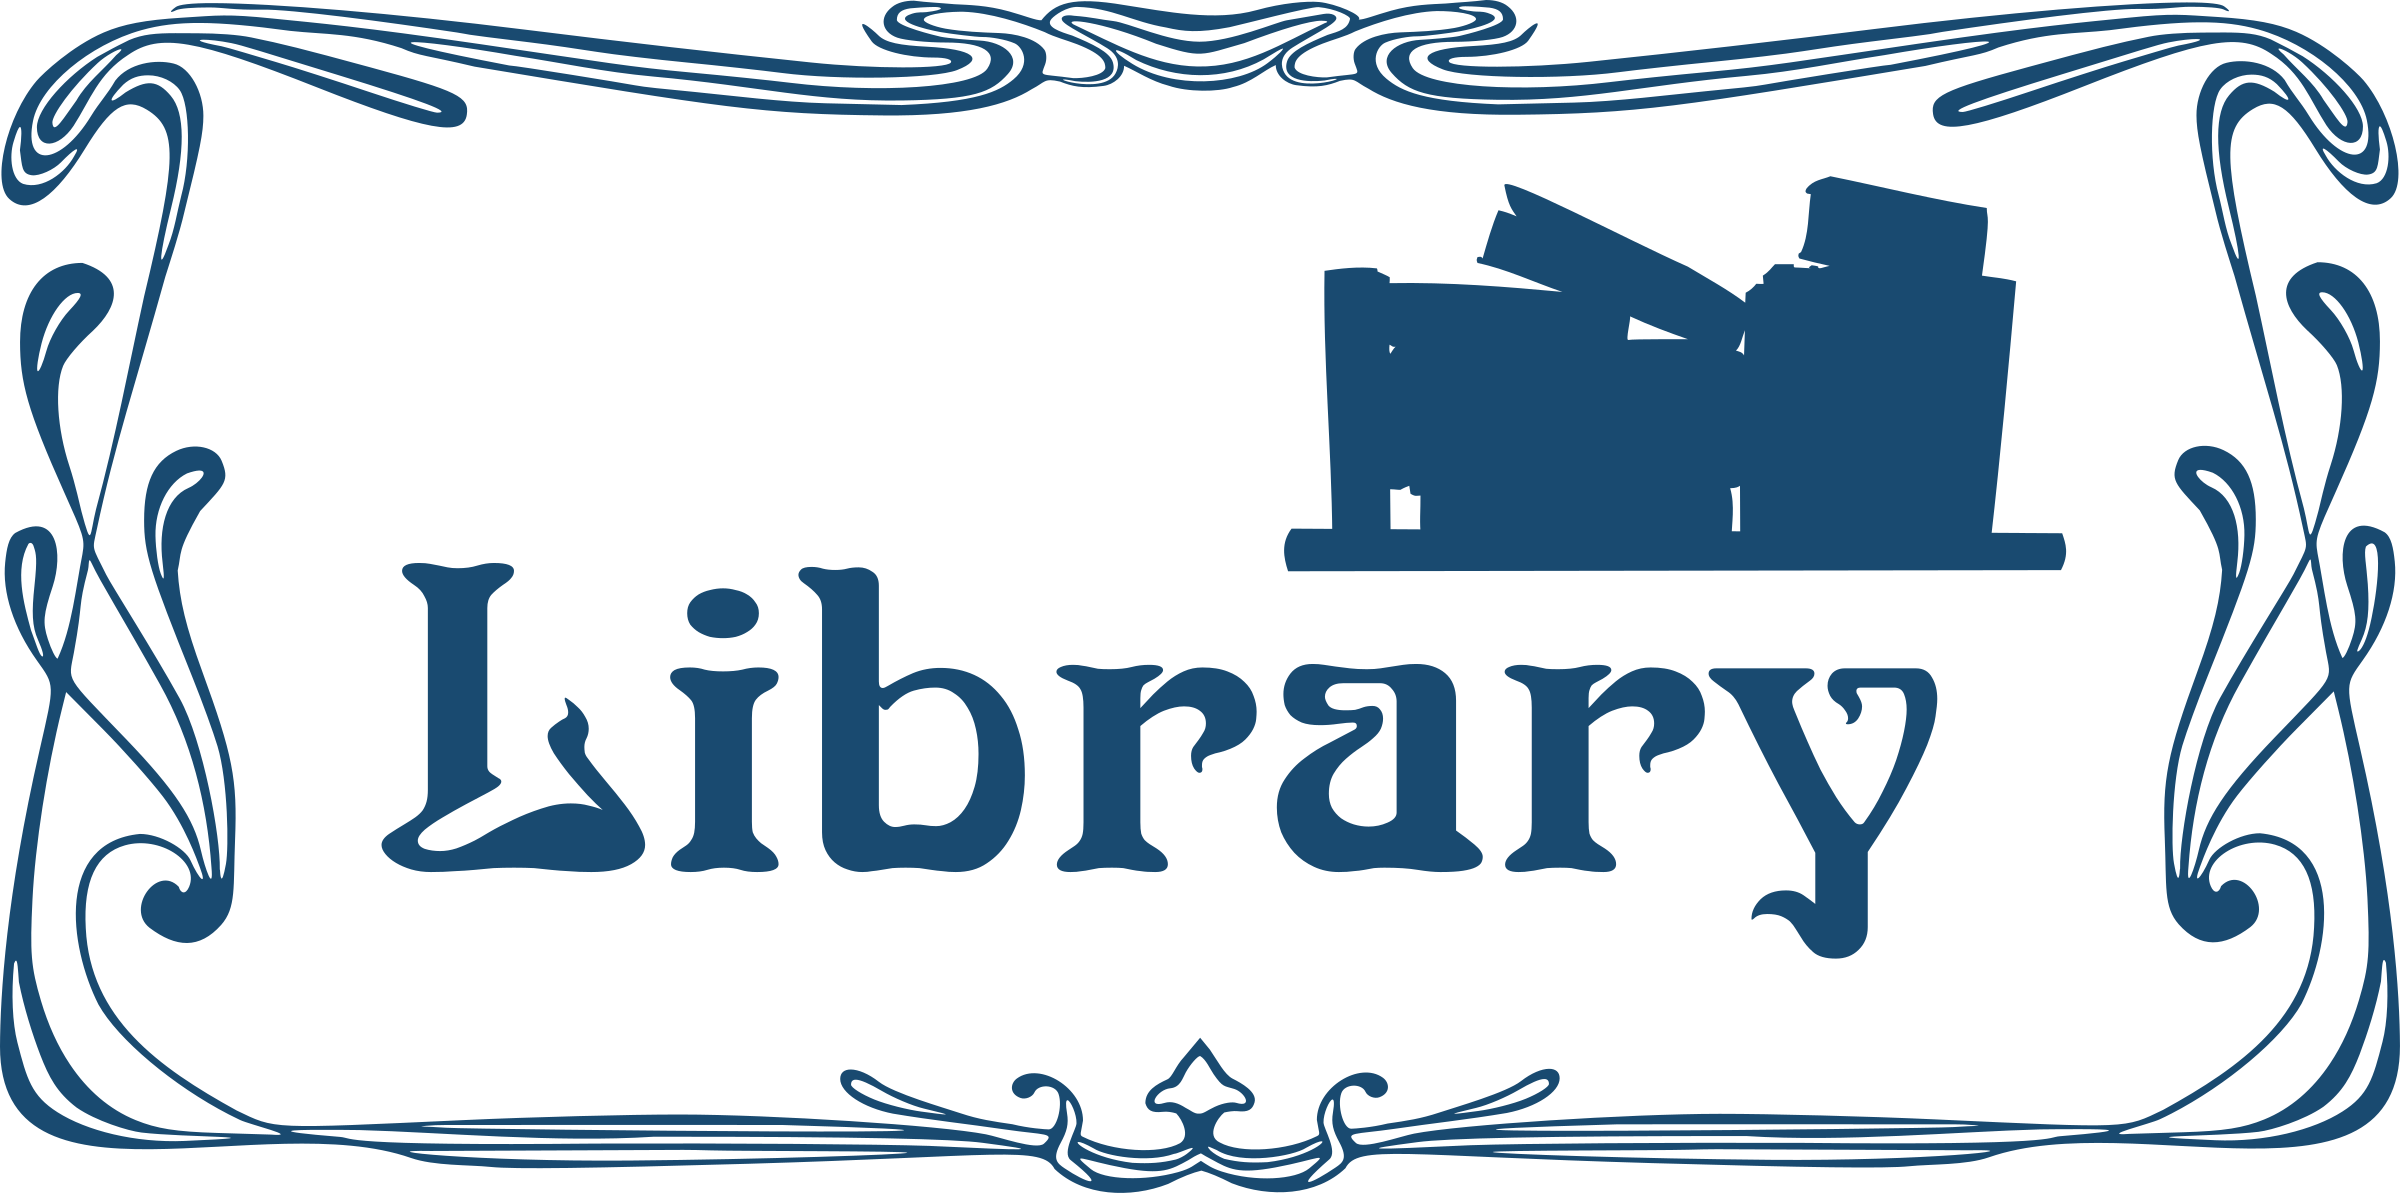 Library door sign SVG Clip arts